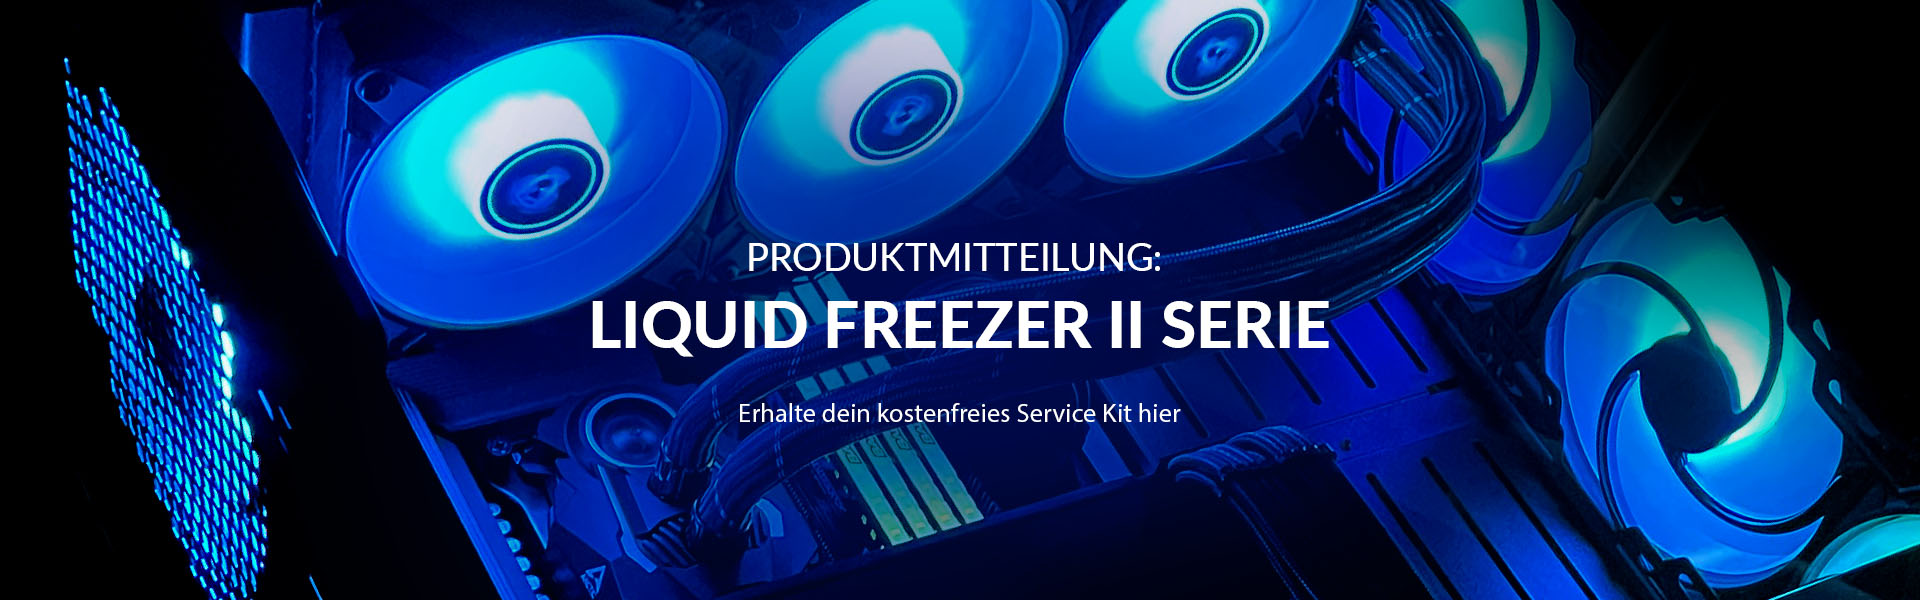 Liquid Freezer - PR